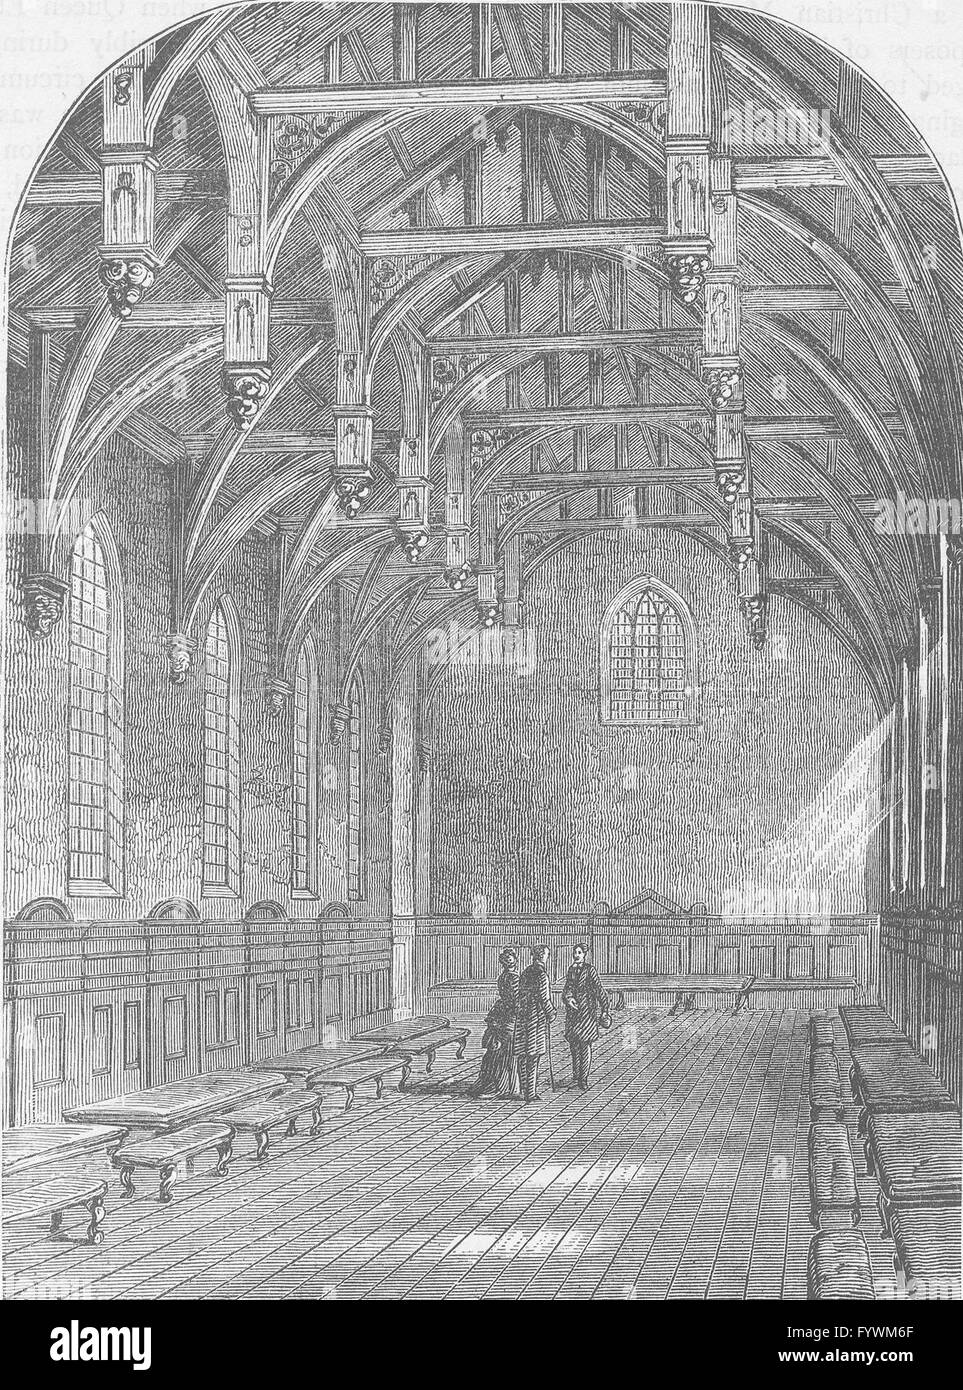 LAMBETH PALACE: Interior of the Great Hall, Lambeth Palace, 1800. London, c1880 Stock Photo